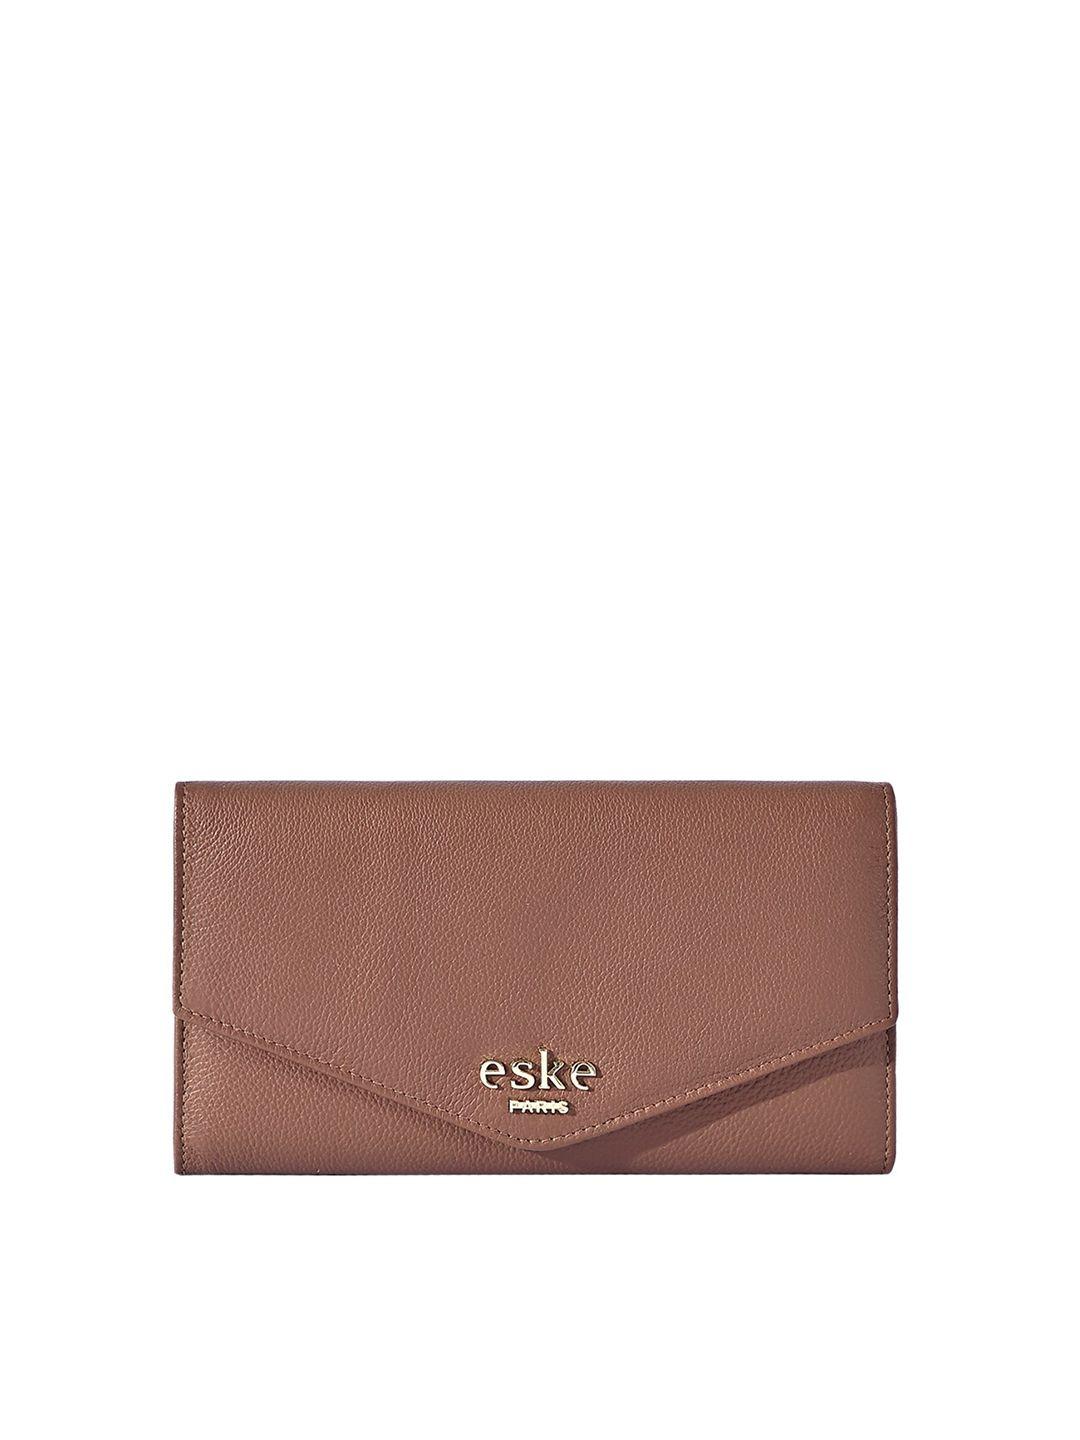 eske women brown textured leather three fold wallet